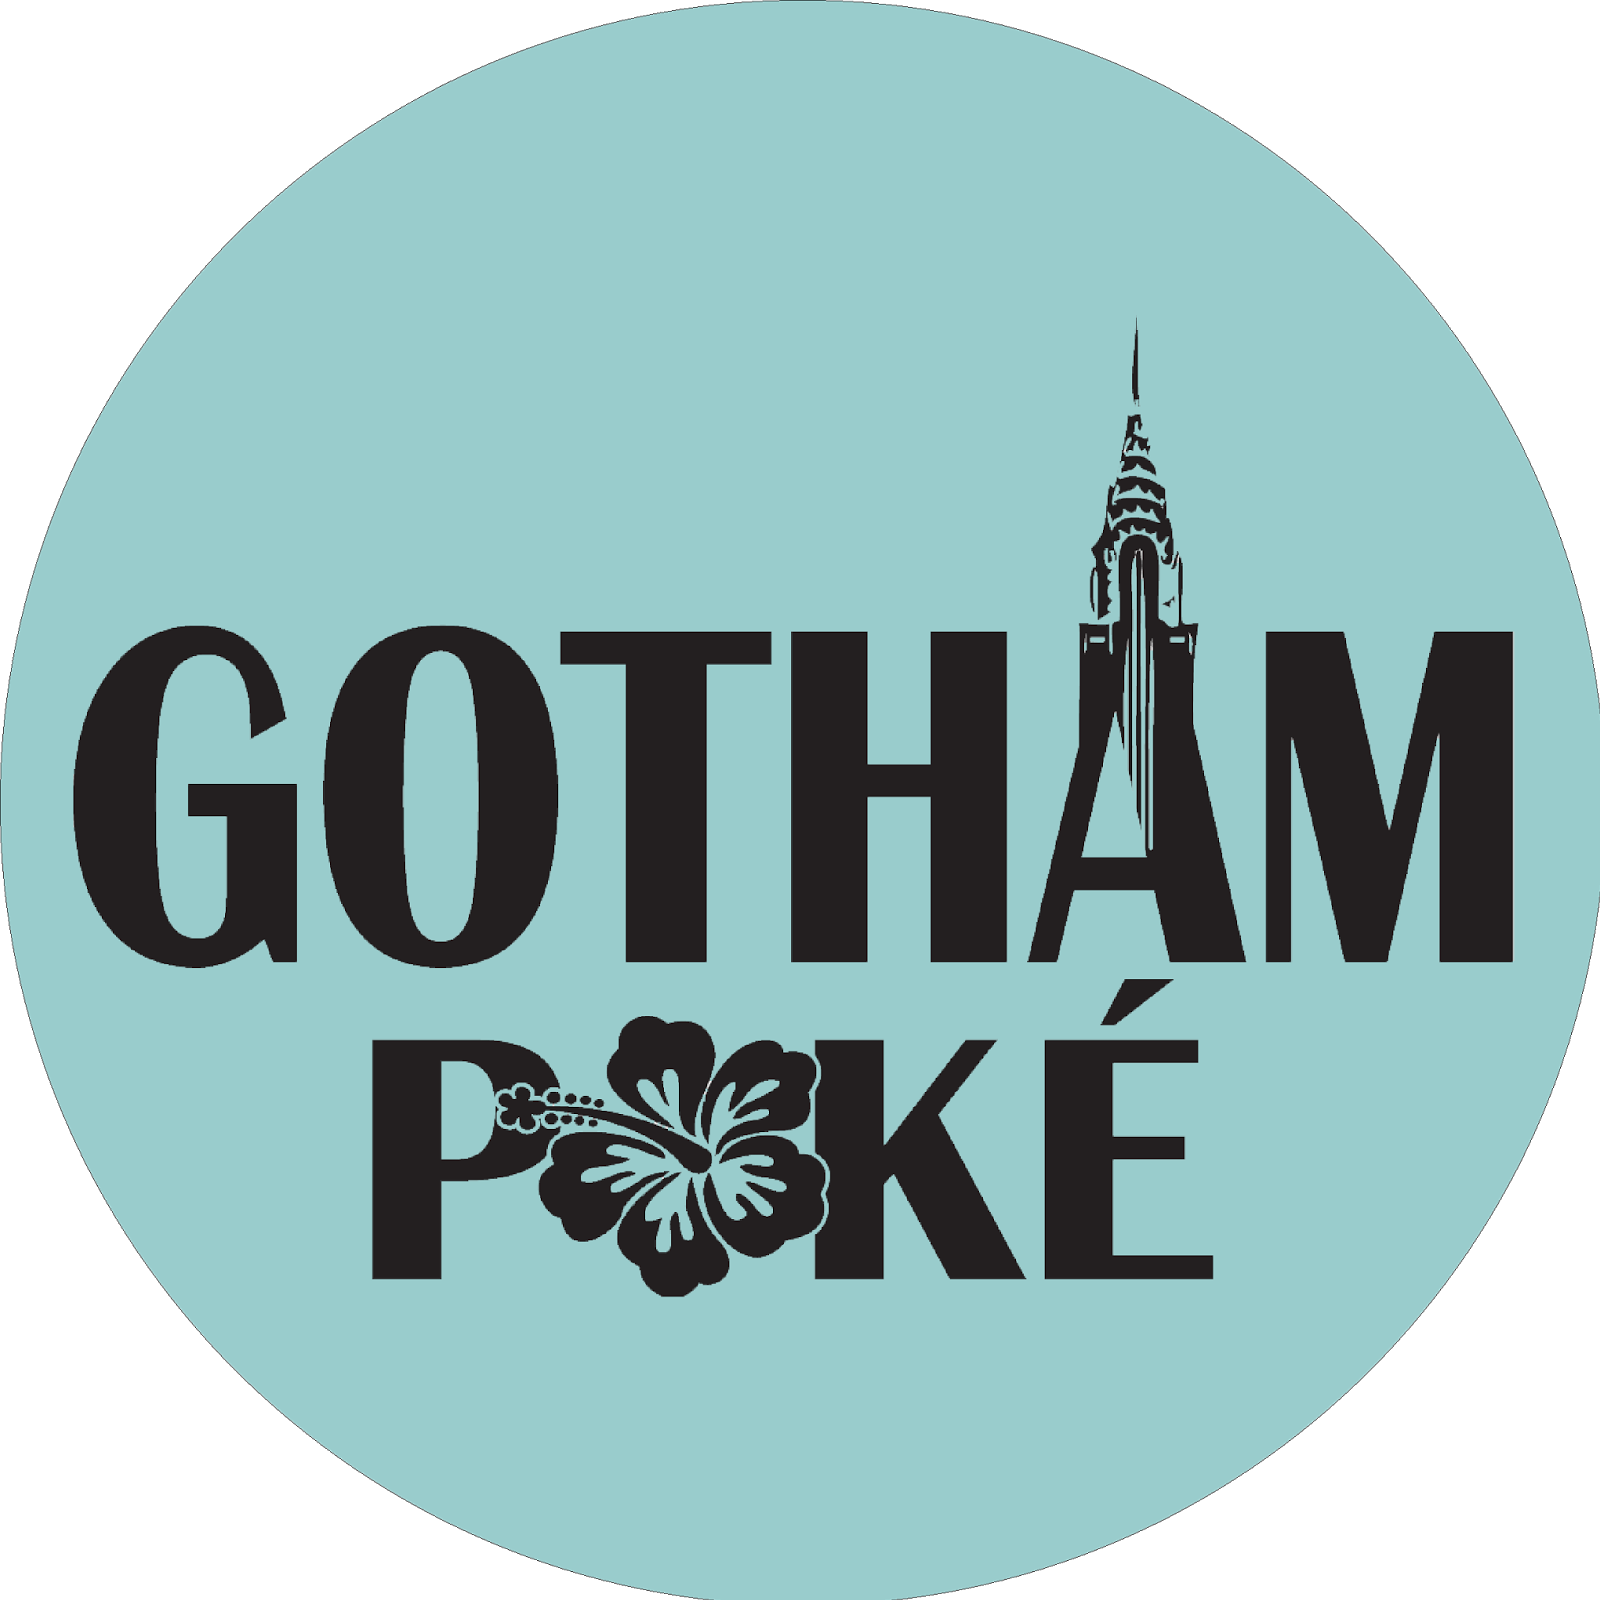 Photo of Gotham Poke in New York City, New York, United States - 2 Picture of Restaurant, Food, Point of interest, Establishment